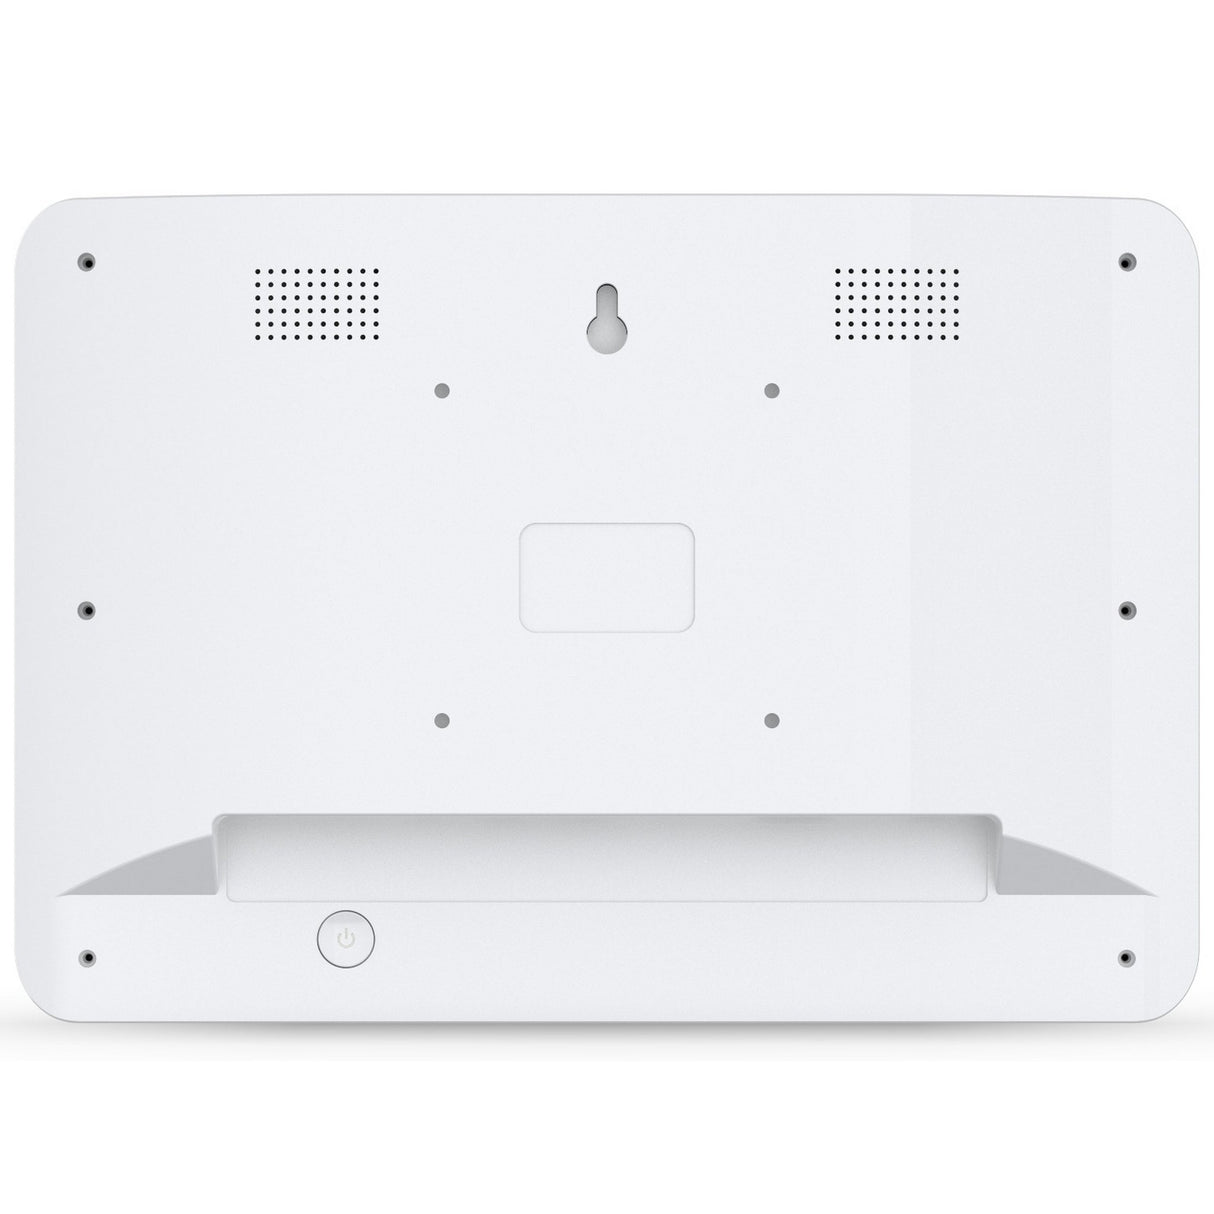 IAdea XDS-1588 15-Inch Widescreen All-In-One Interactive Meeting Room Door Sign, NFC